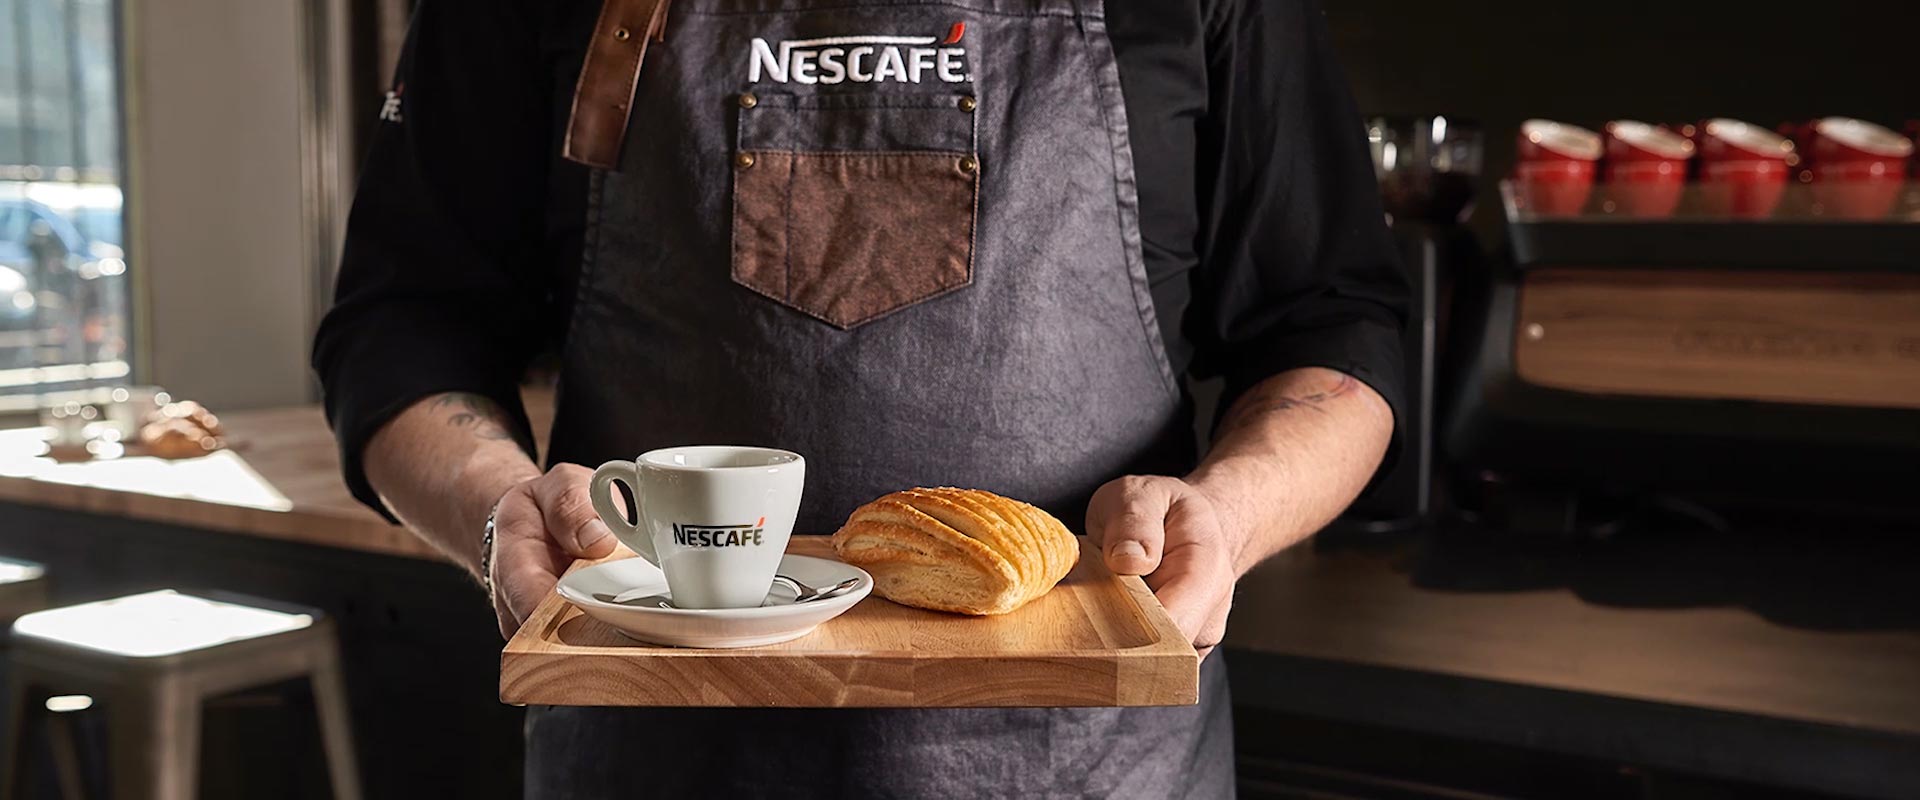 Nescafé beans countertop communication materials